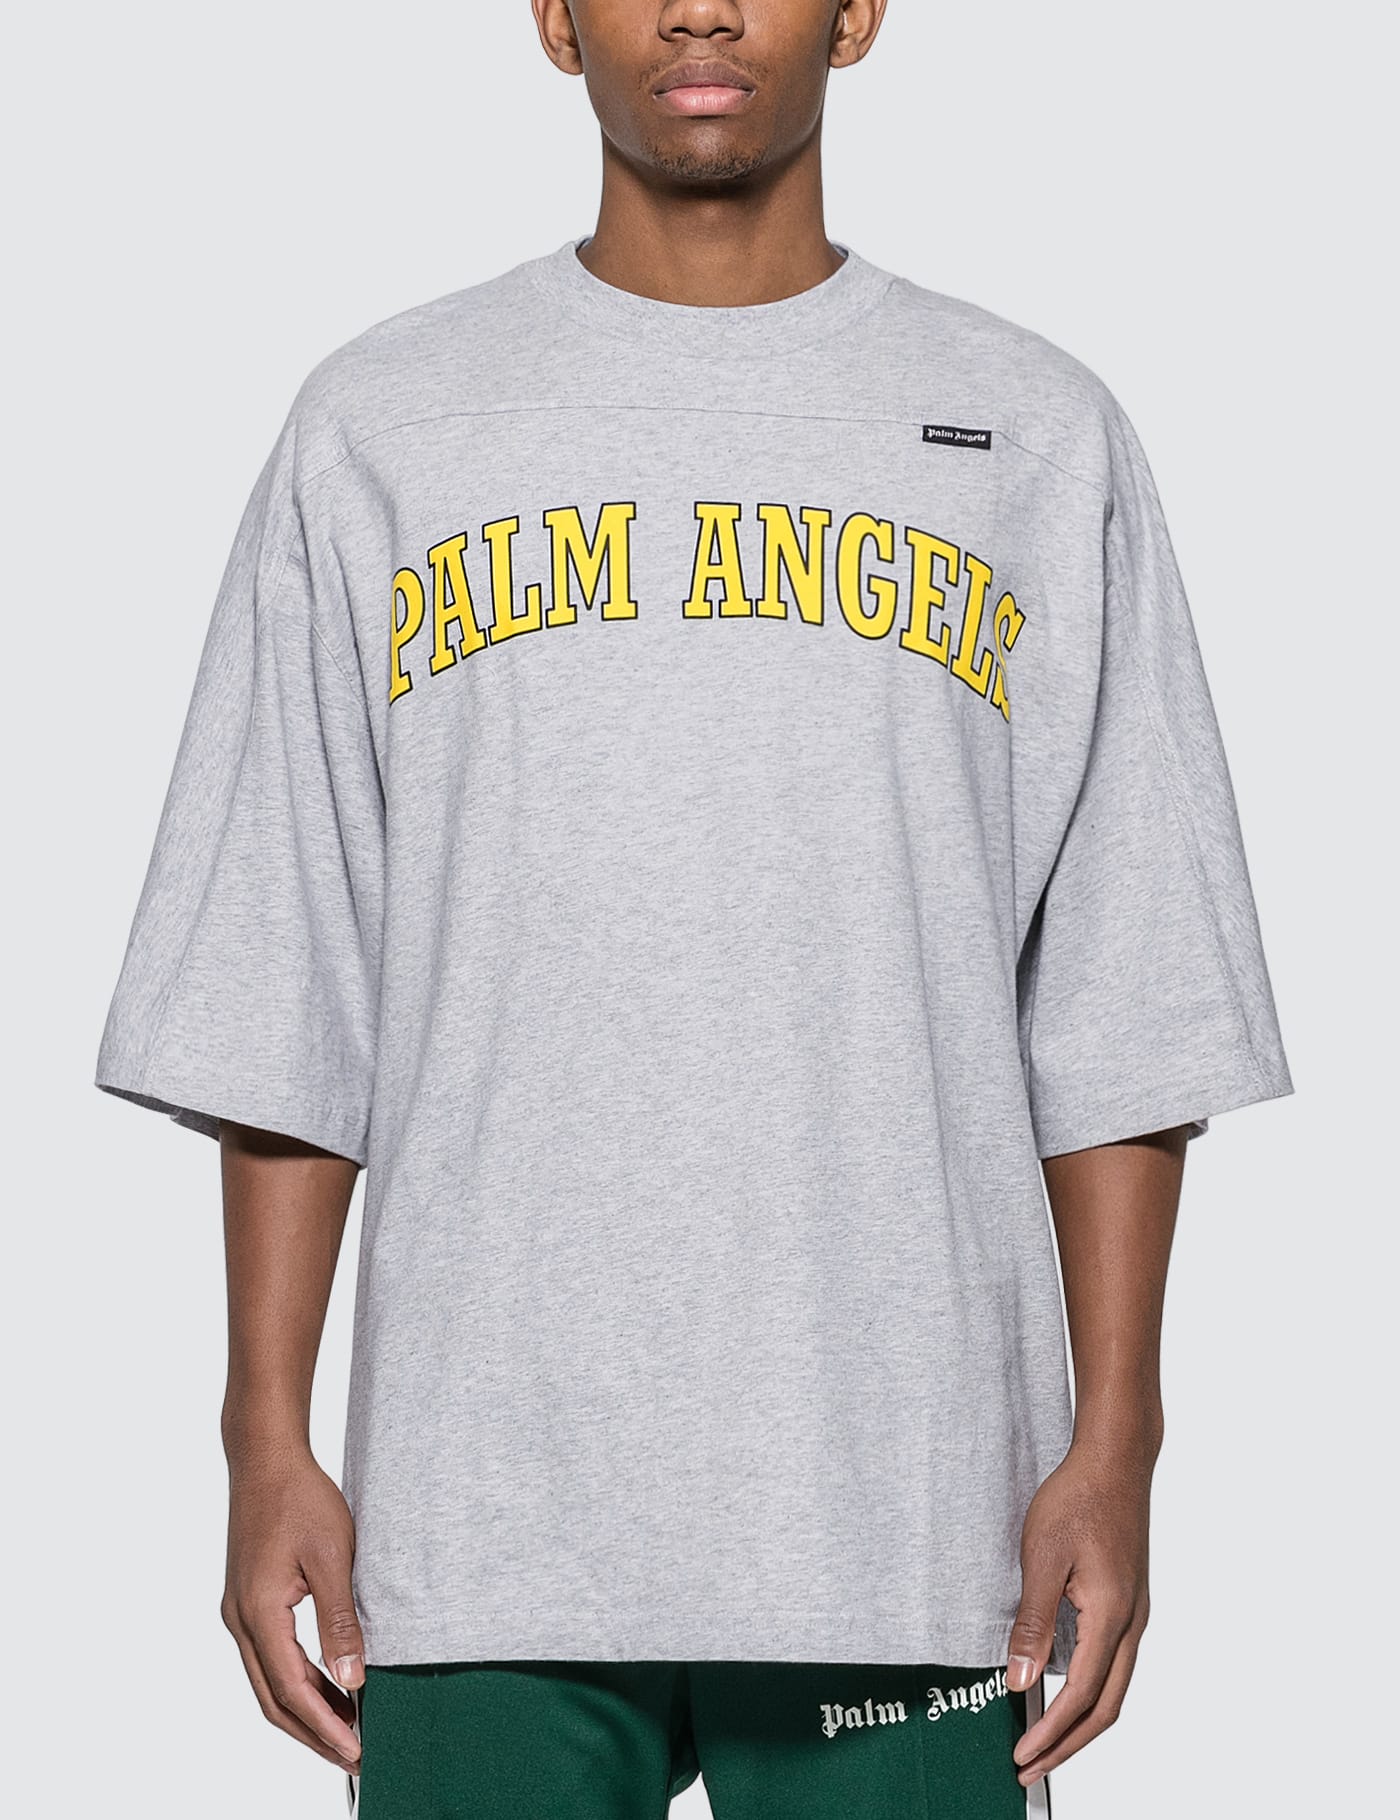 palm angels grey t shirt